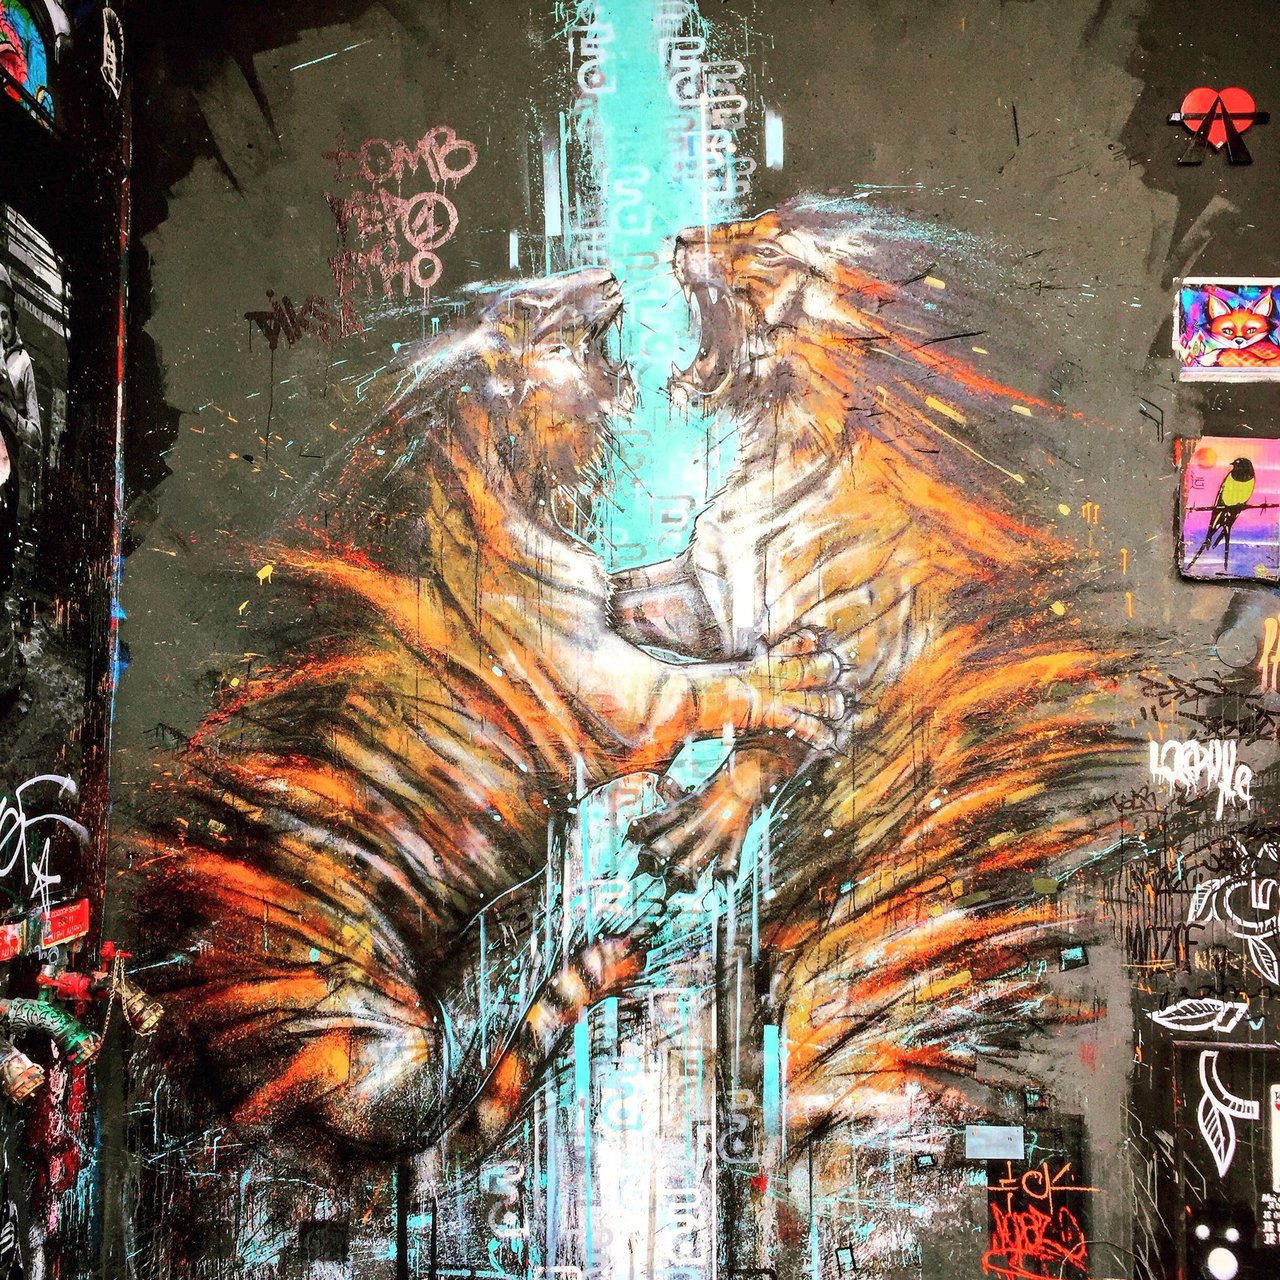 Tigers by #freresdart #streetart #graffiti #graffitiart #Spray #spraypaint #wall #urbanart #nirindastreet #lelavomatik #paris https://t.co/zh8ifSAbMw